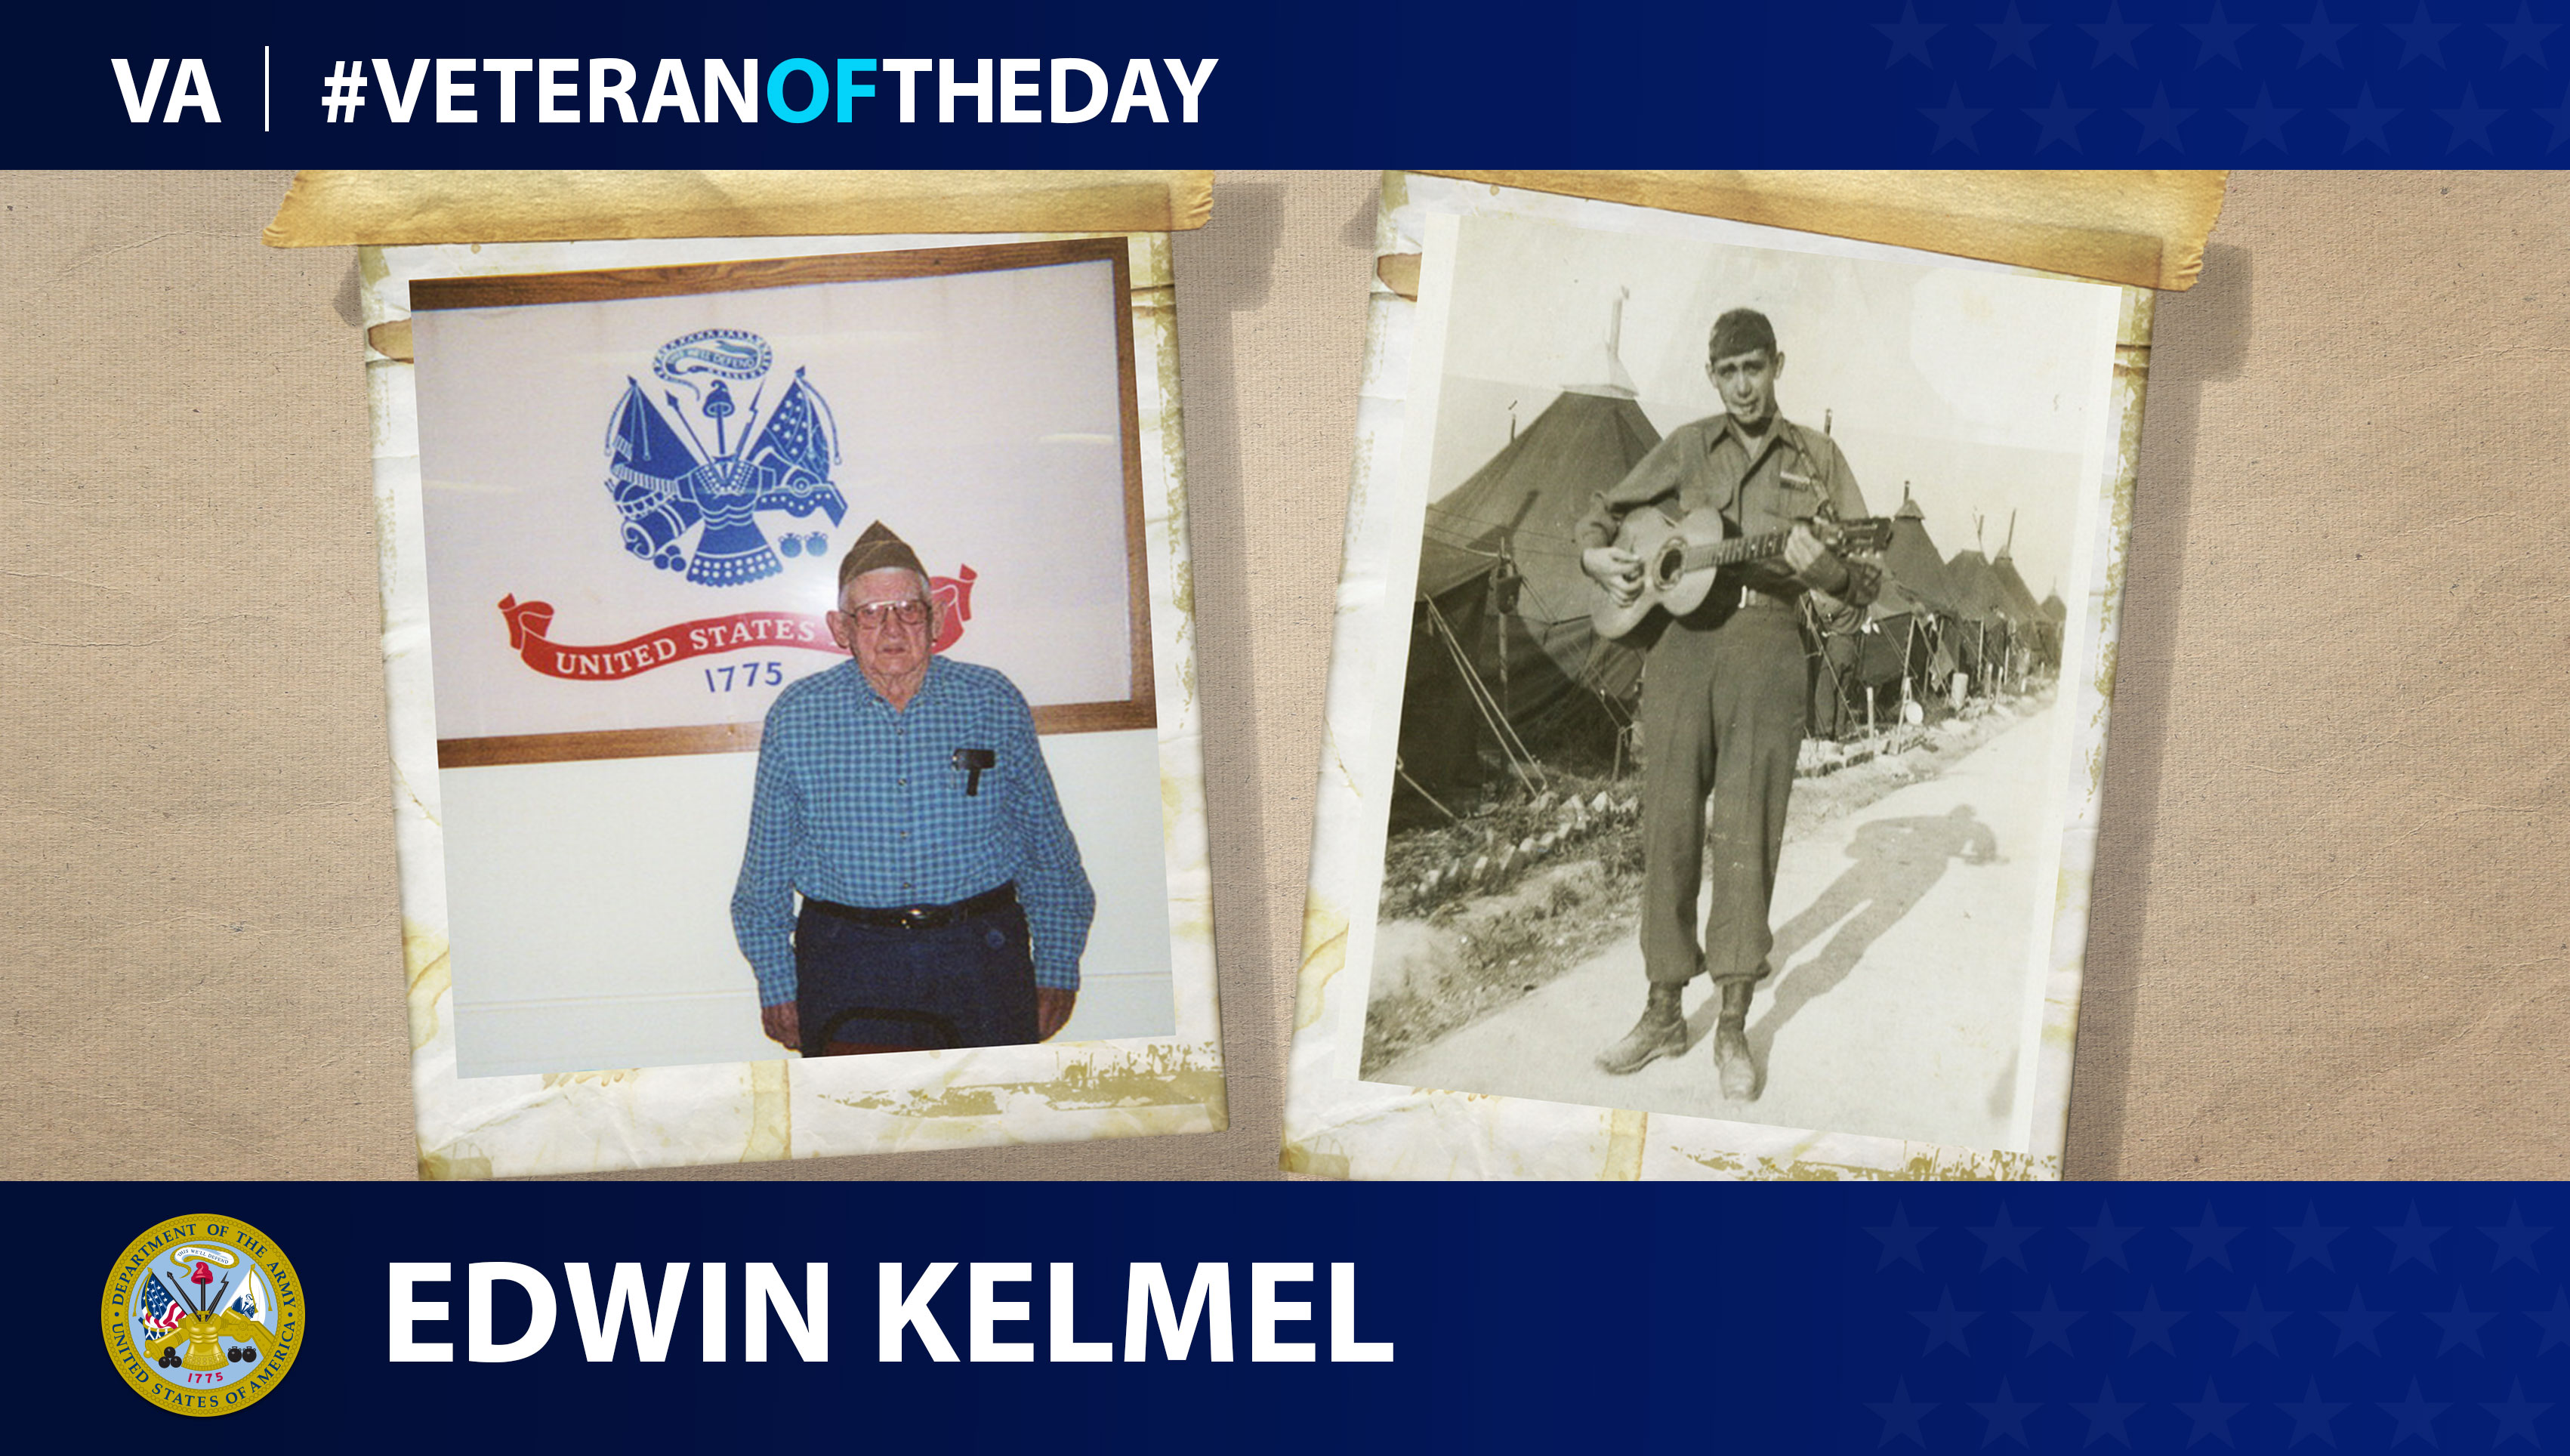 Army Veteran Edwin Kelmel is today's Veteran of the Day.